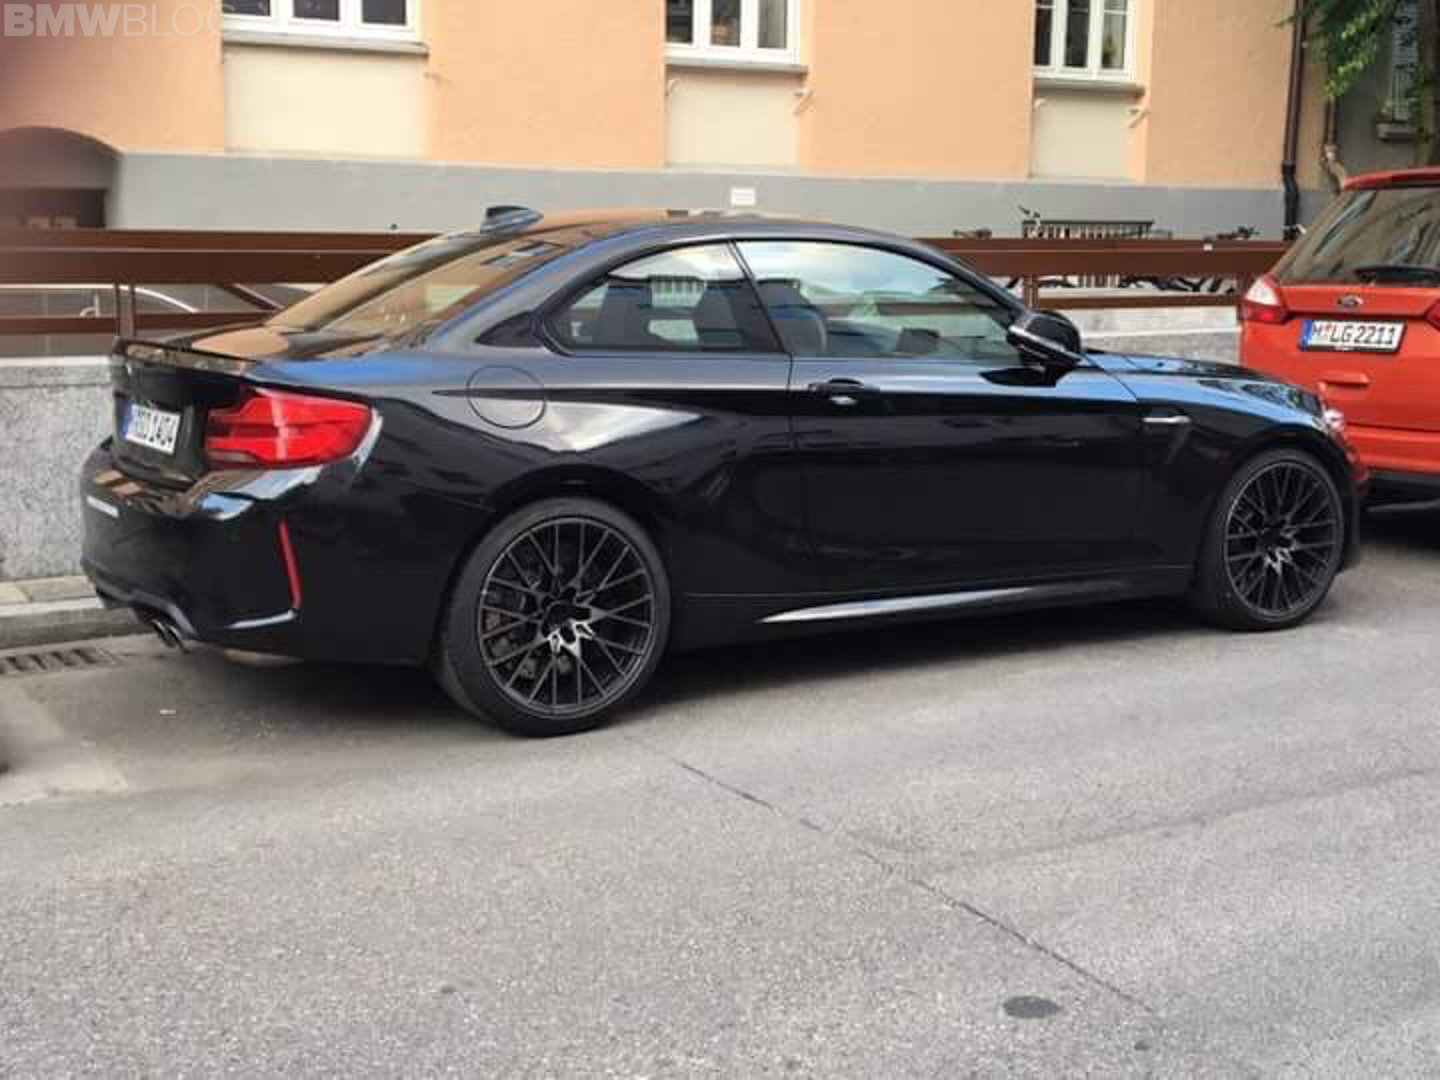 SPIED: BMW M2 Competition caught in Munich